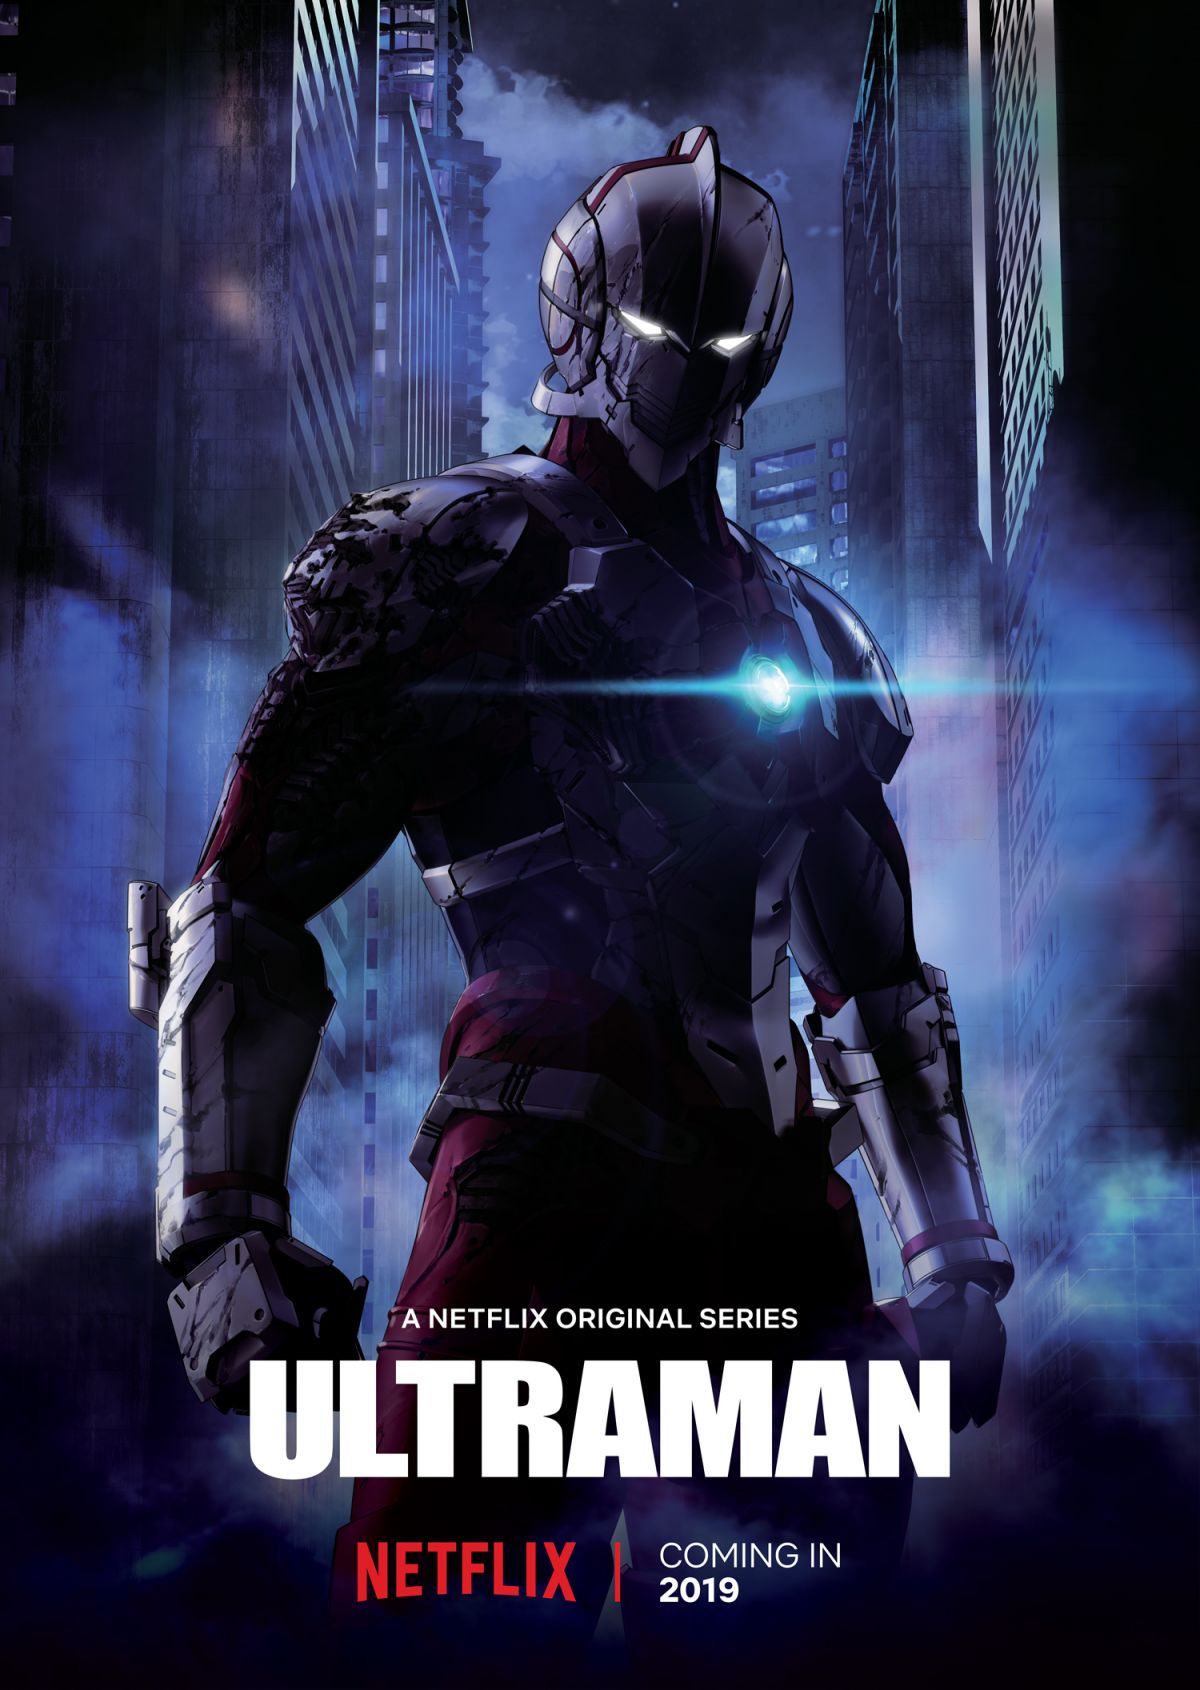 New CGI Anime Ultraman To Premiere On Netflix In 2019 | Geek Culture